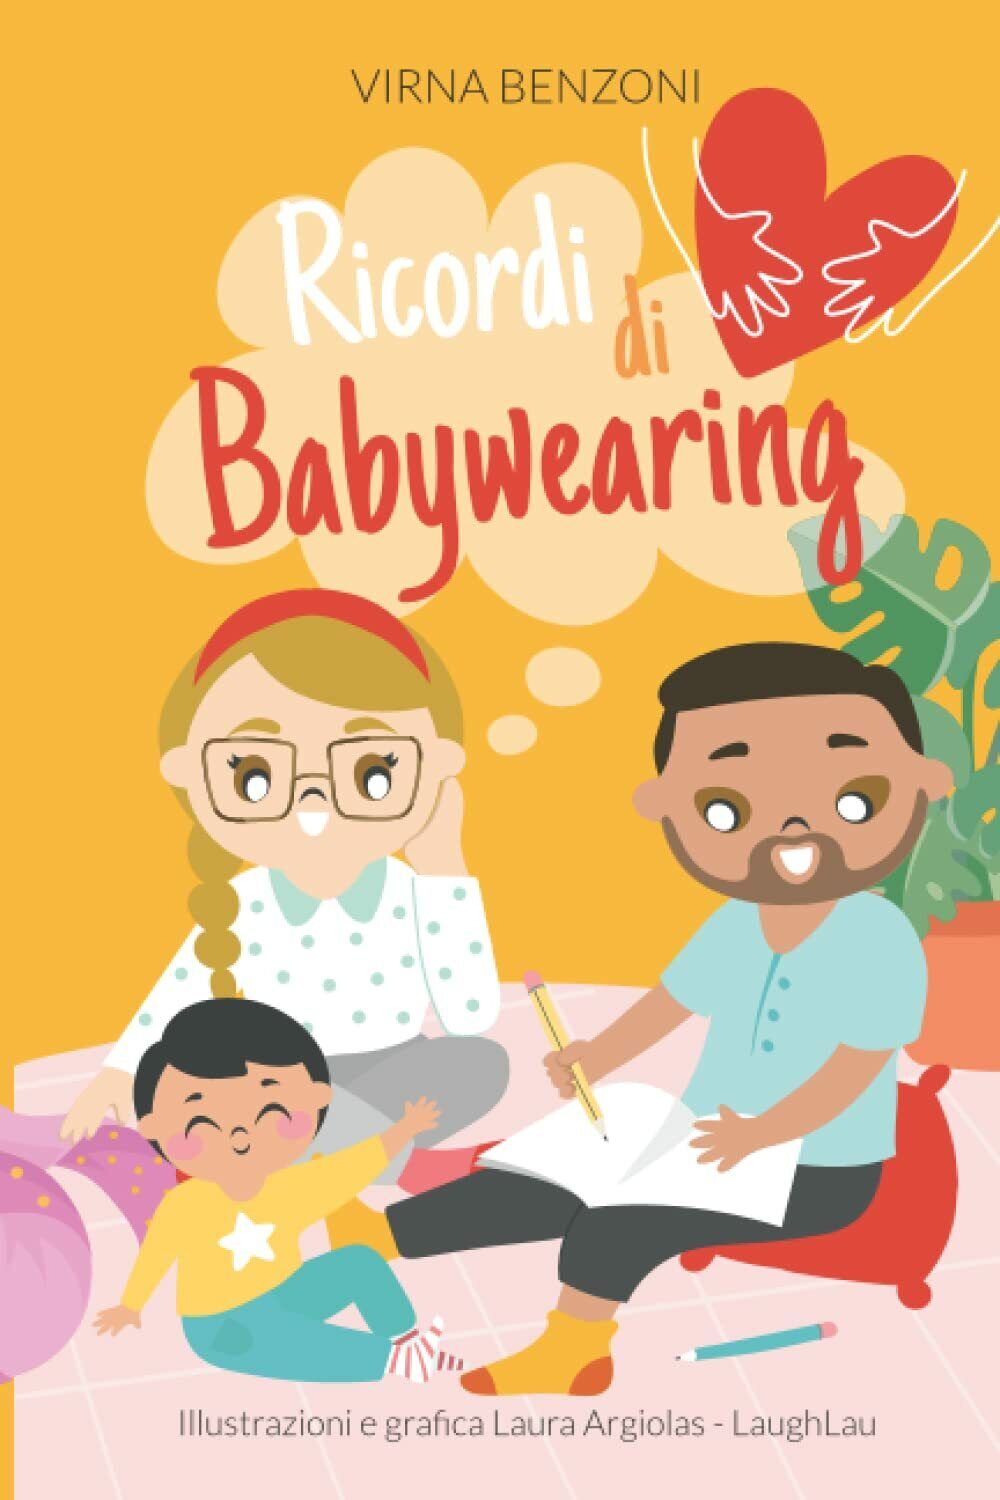 Ricordi di babywearing di Virna Benzoni,  2021,  Indipendently Published